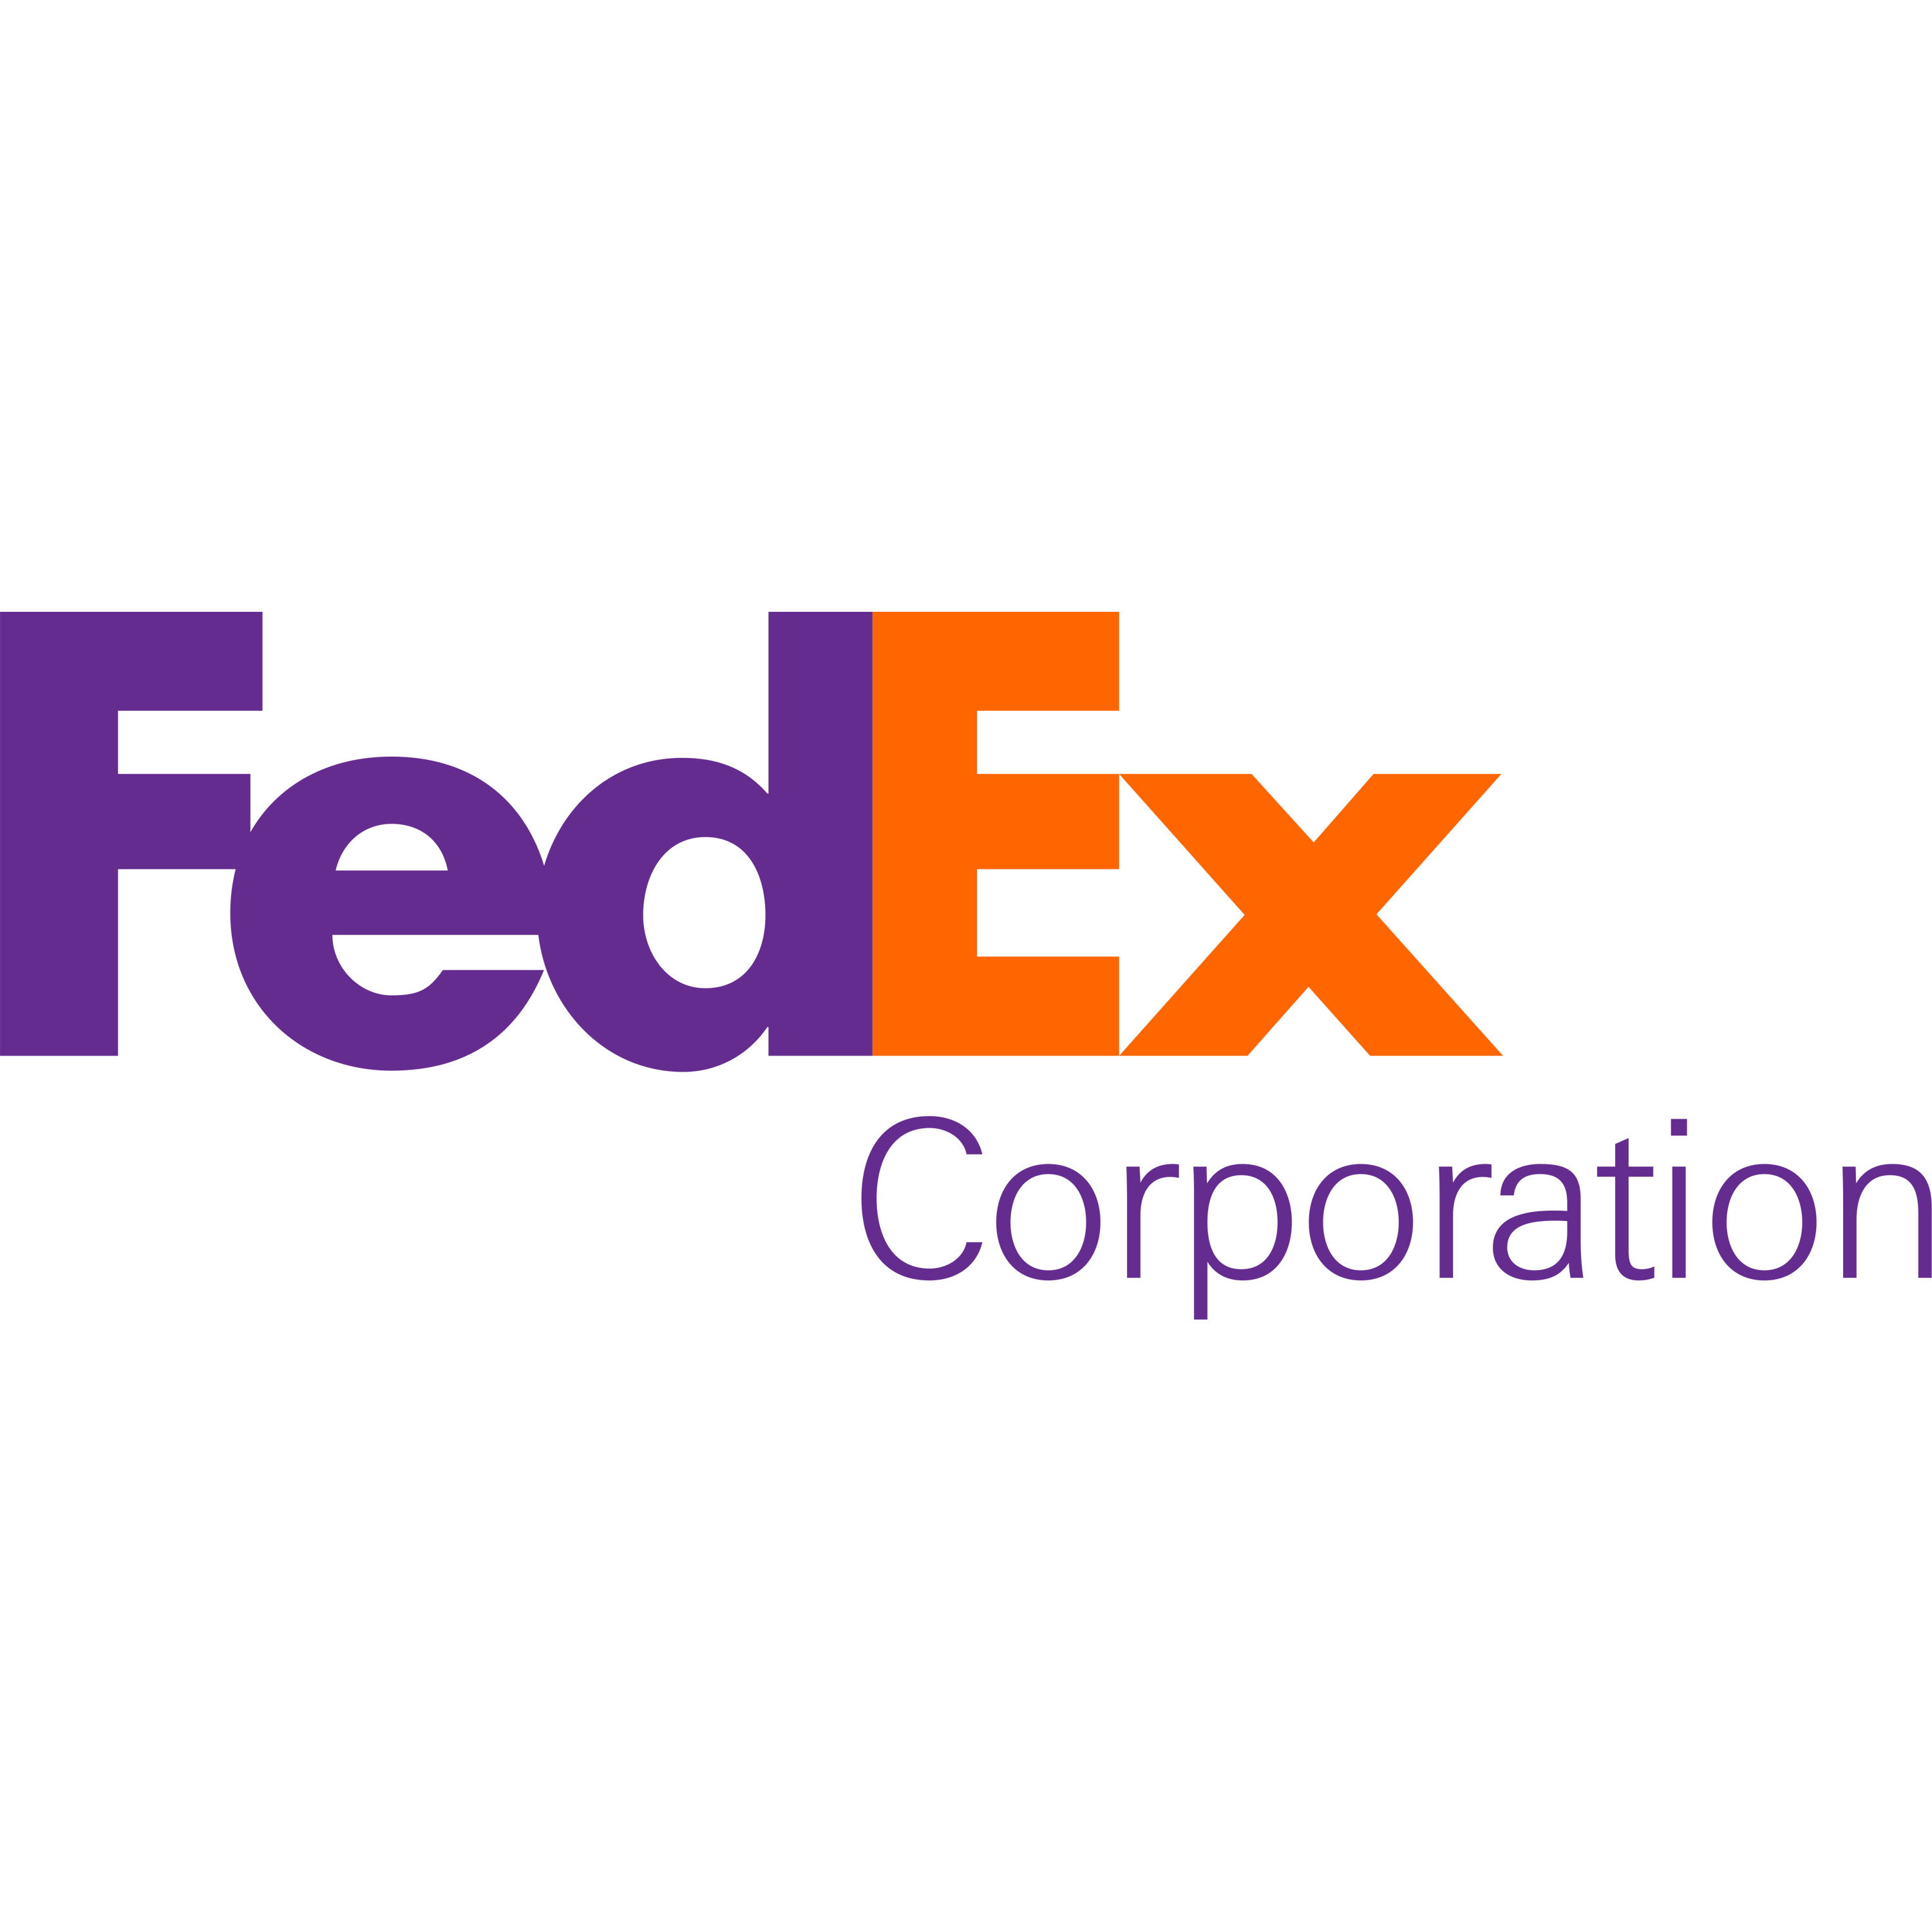 Fedex Corporation Logo Transparent Image